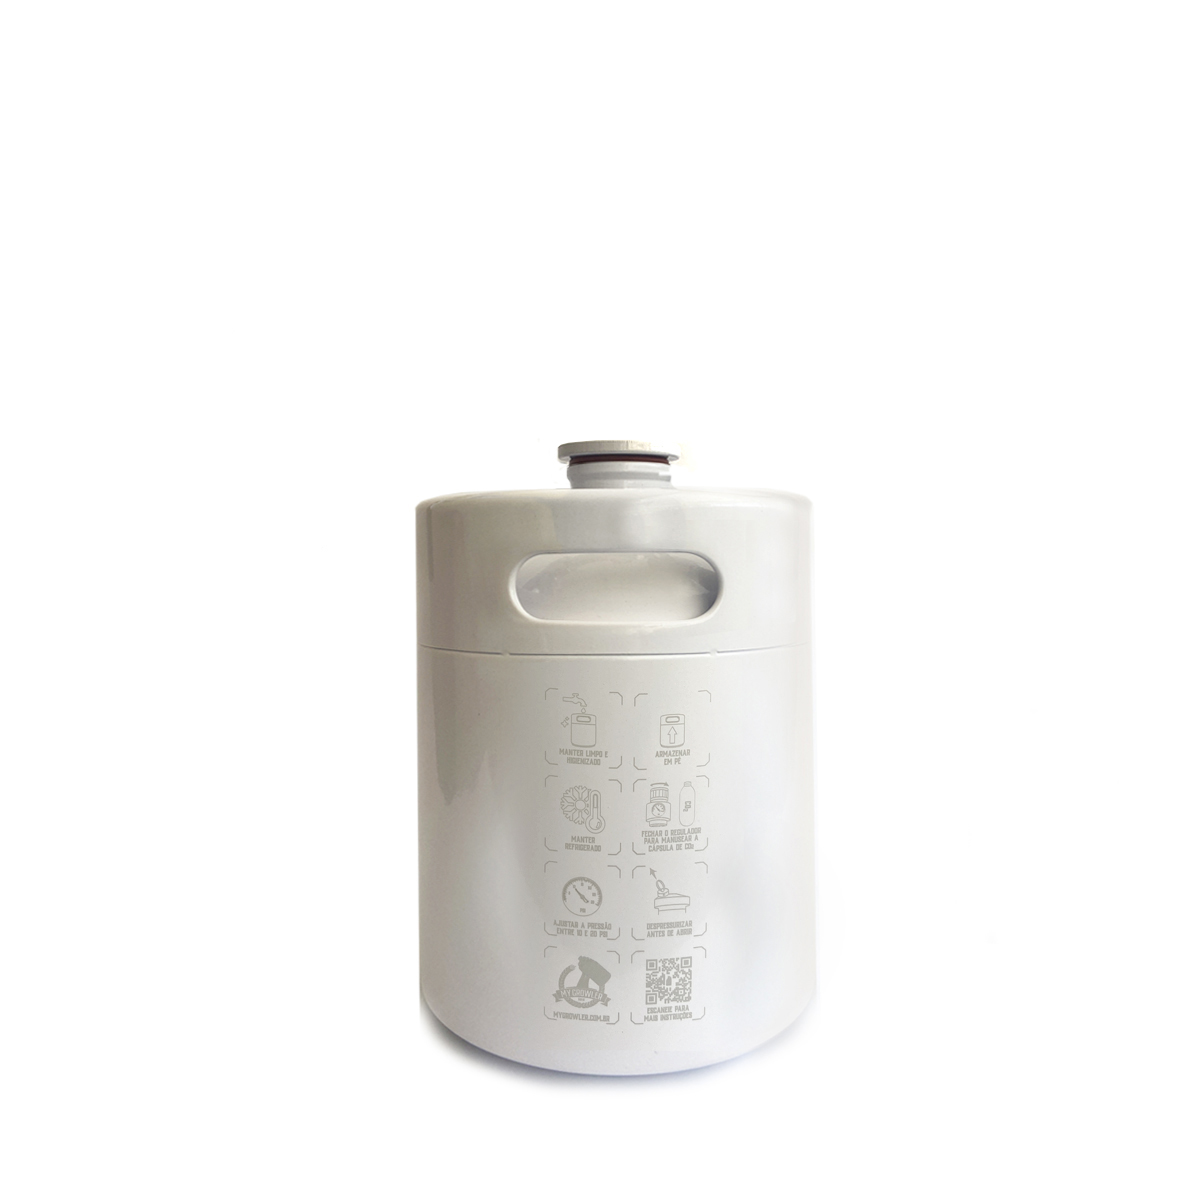 Kit My Keg: Chopeira 2L branco com torneira americana standard